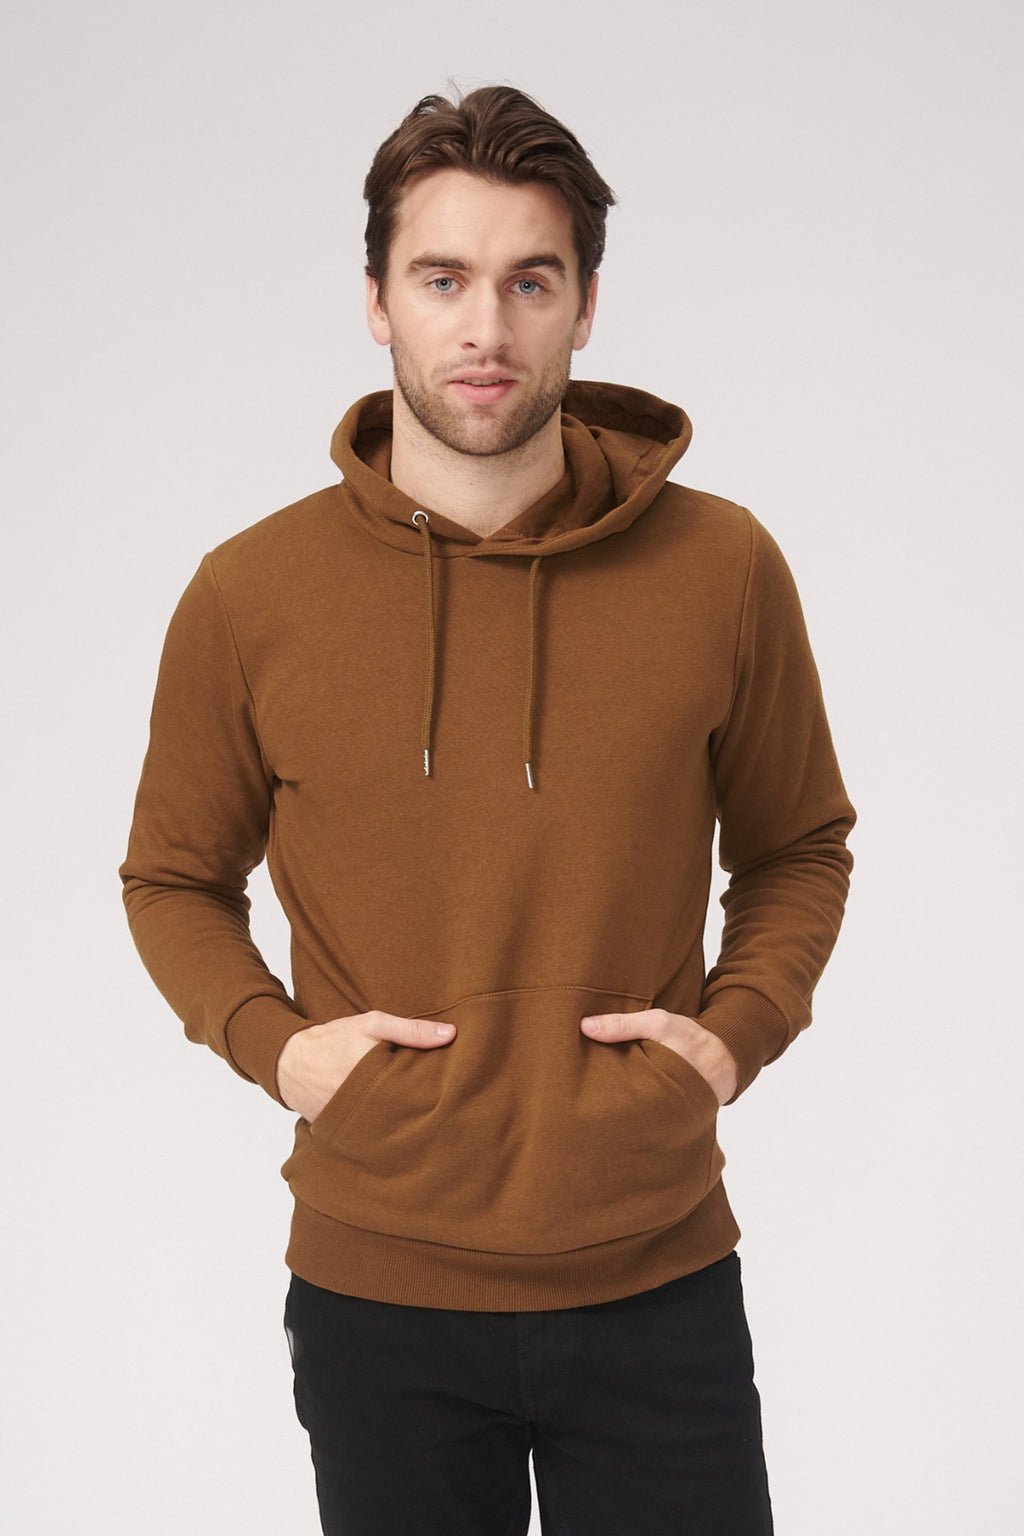 Basic Sweatsuit met hoodie (bruin) - pakketdeal